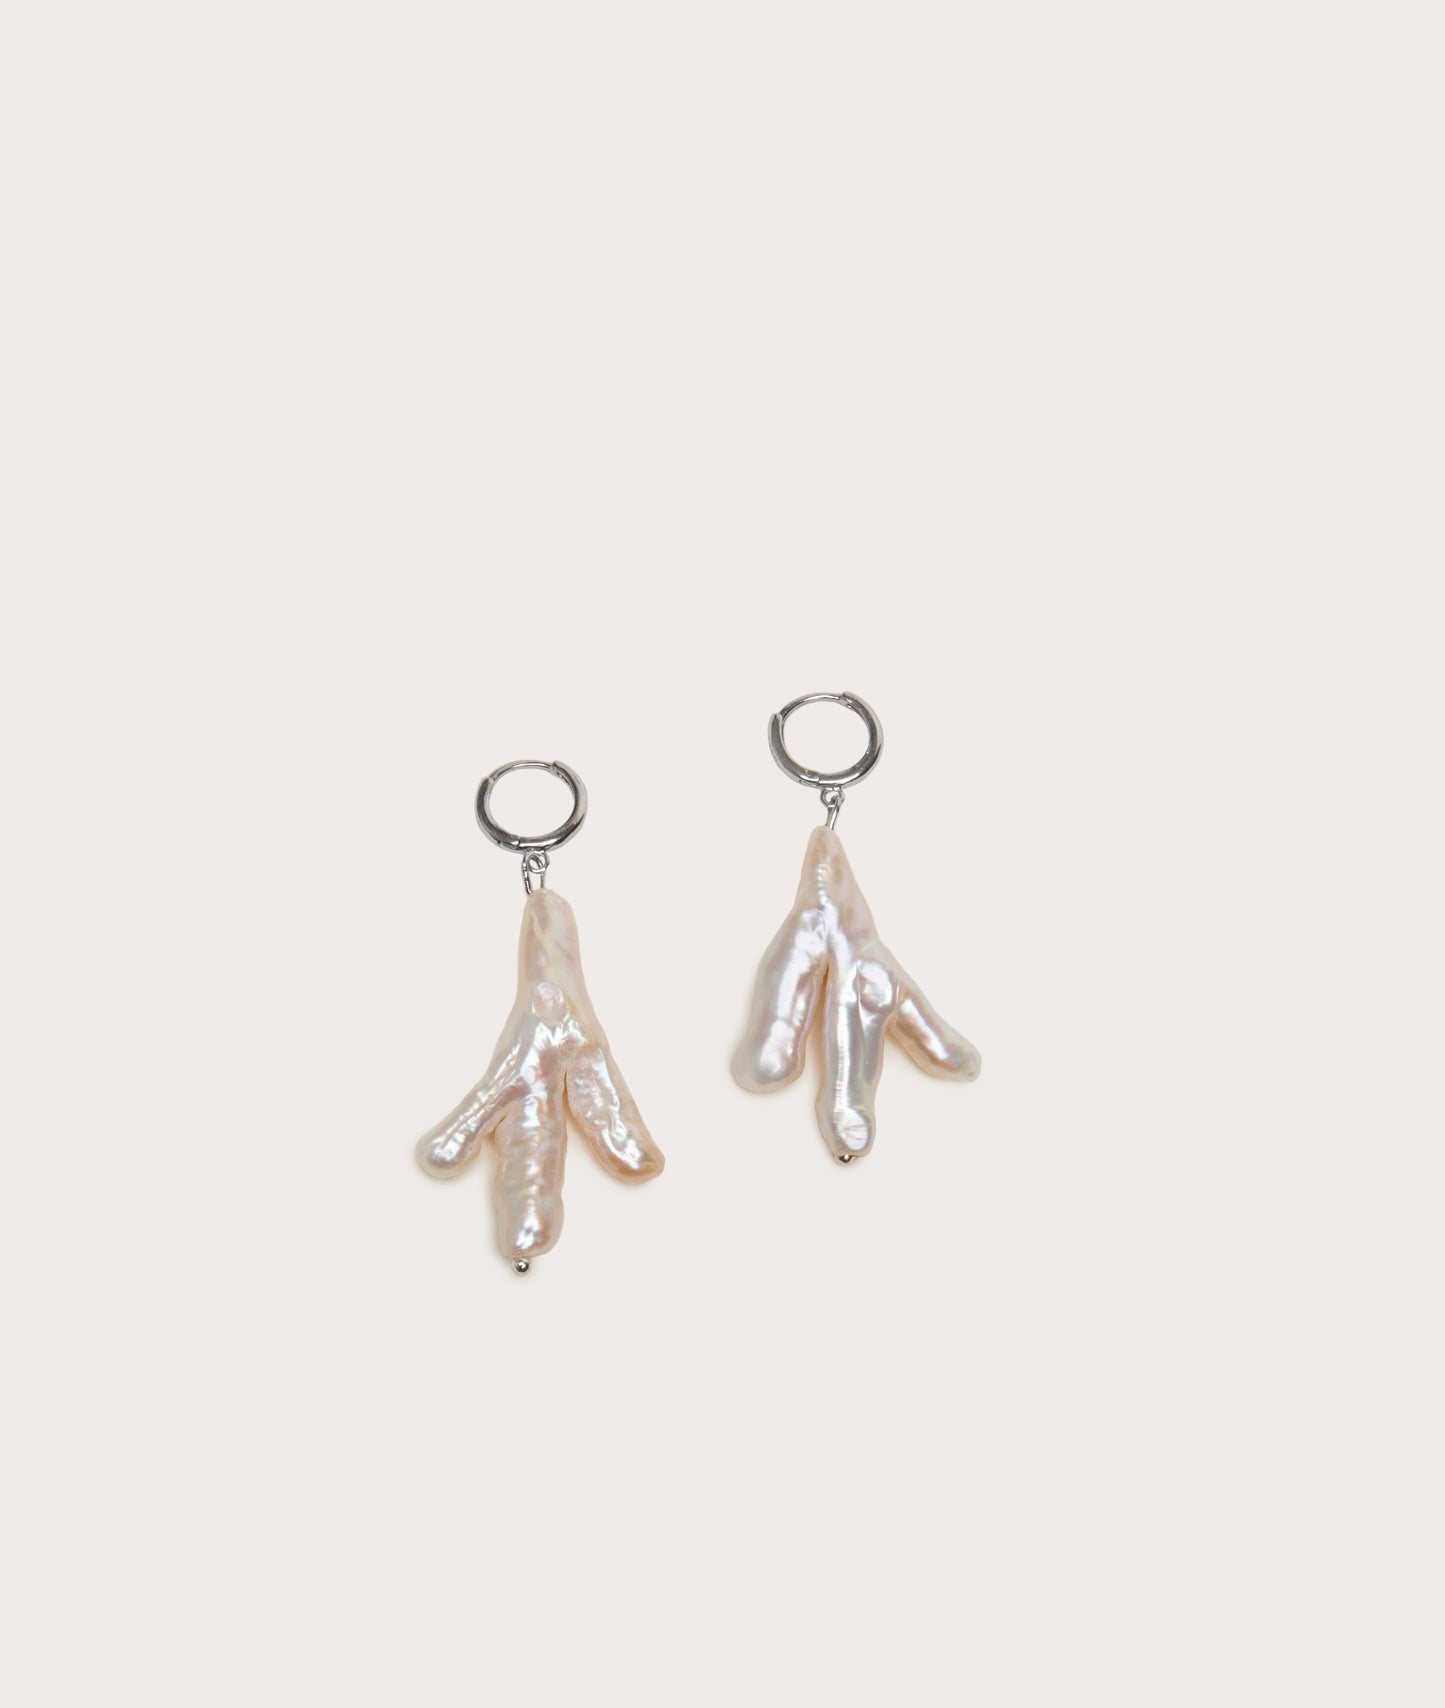 Host Earrings with Chicken Feet Pearls